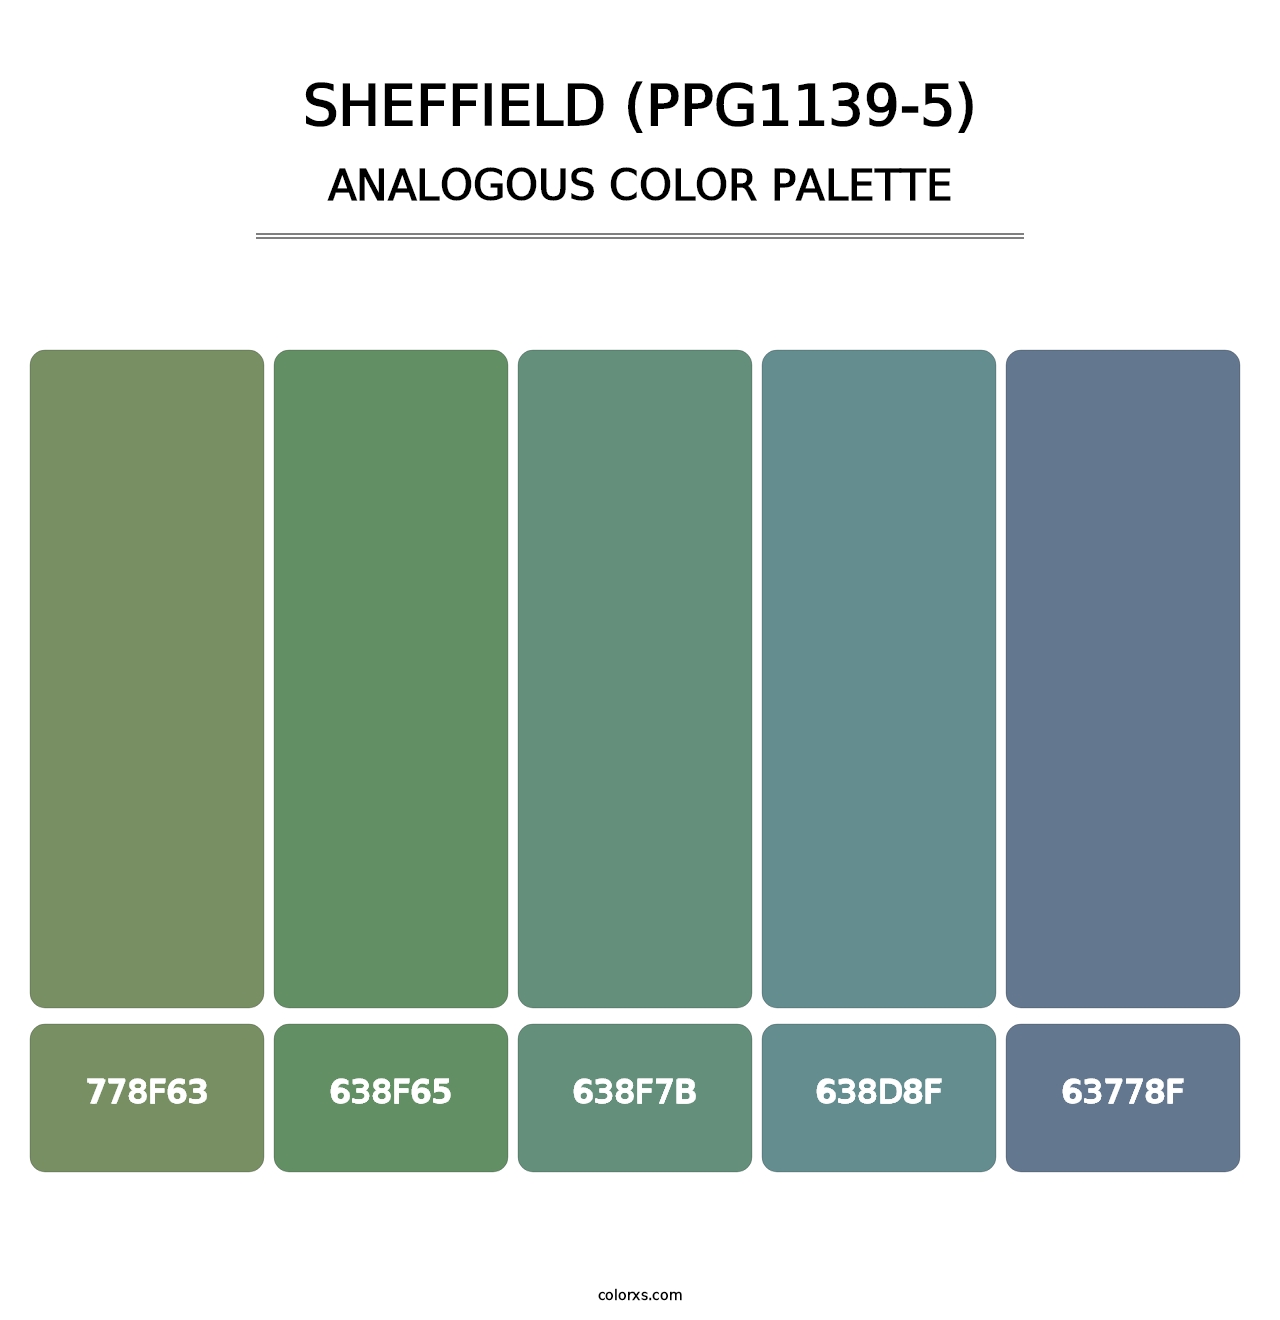 Sheffield (PPG1139-5) - Analogous Color Palette